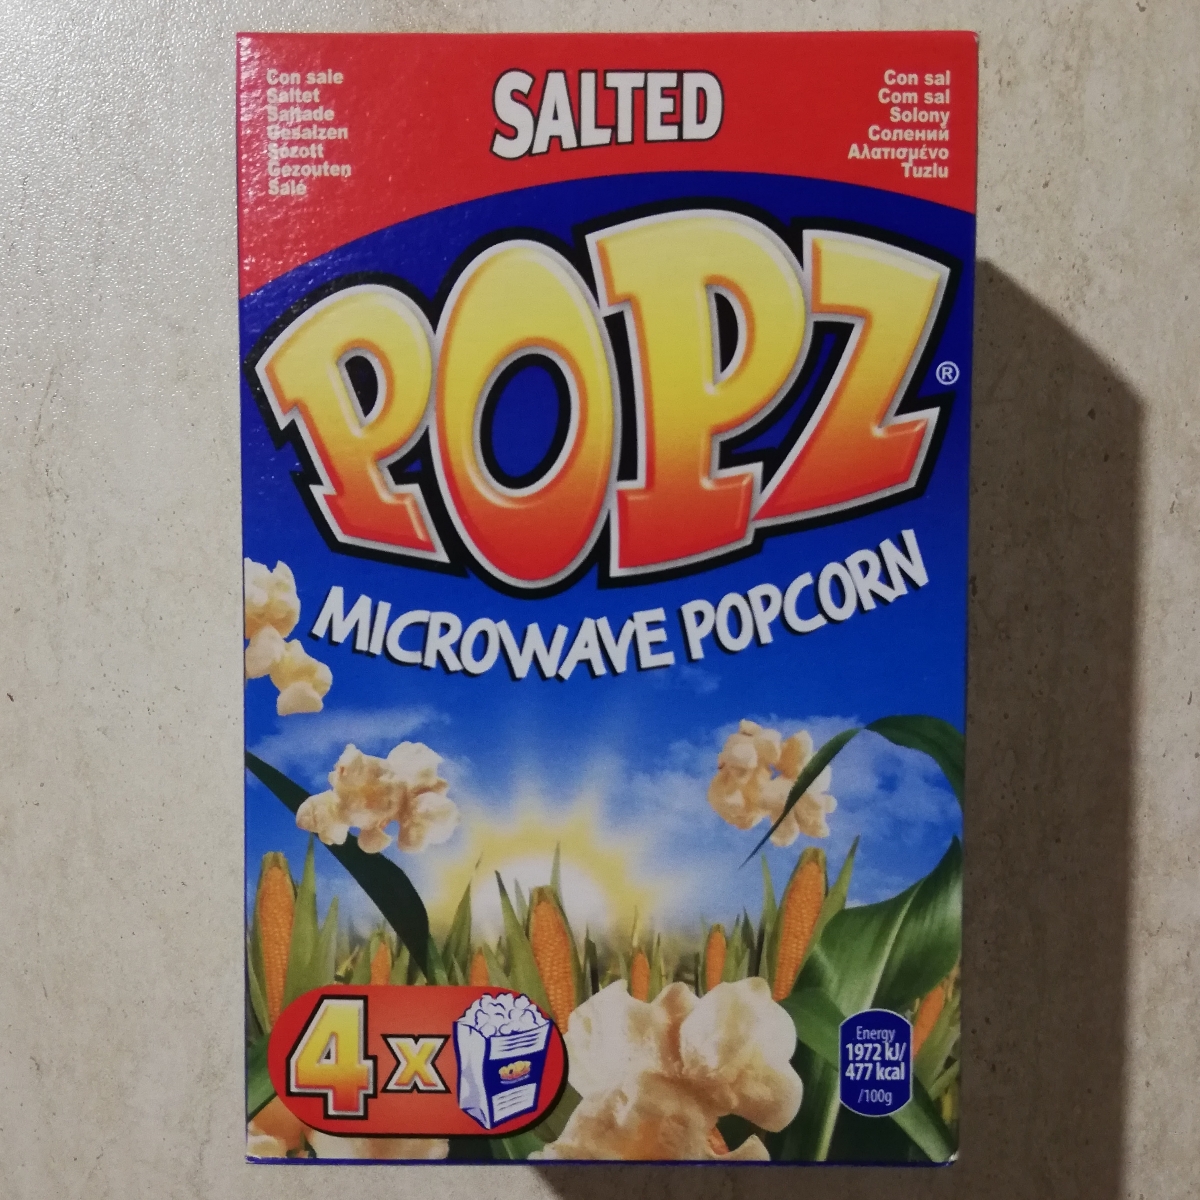 Popz Microwave Popcorn Reviews | abillion